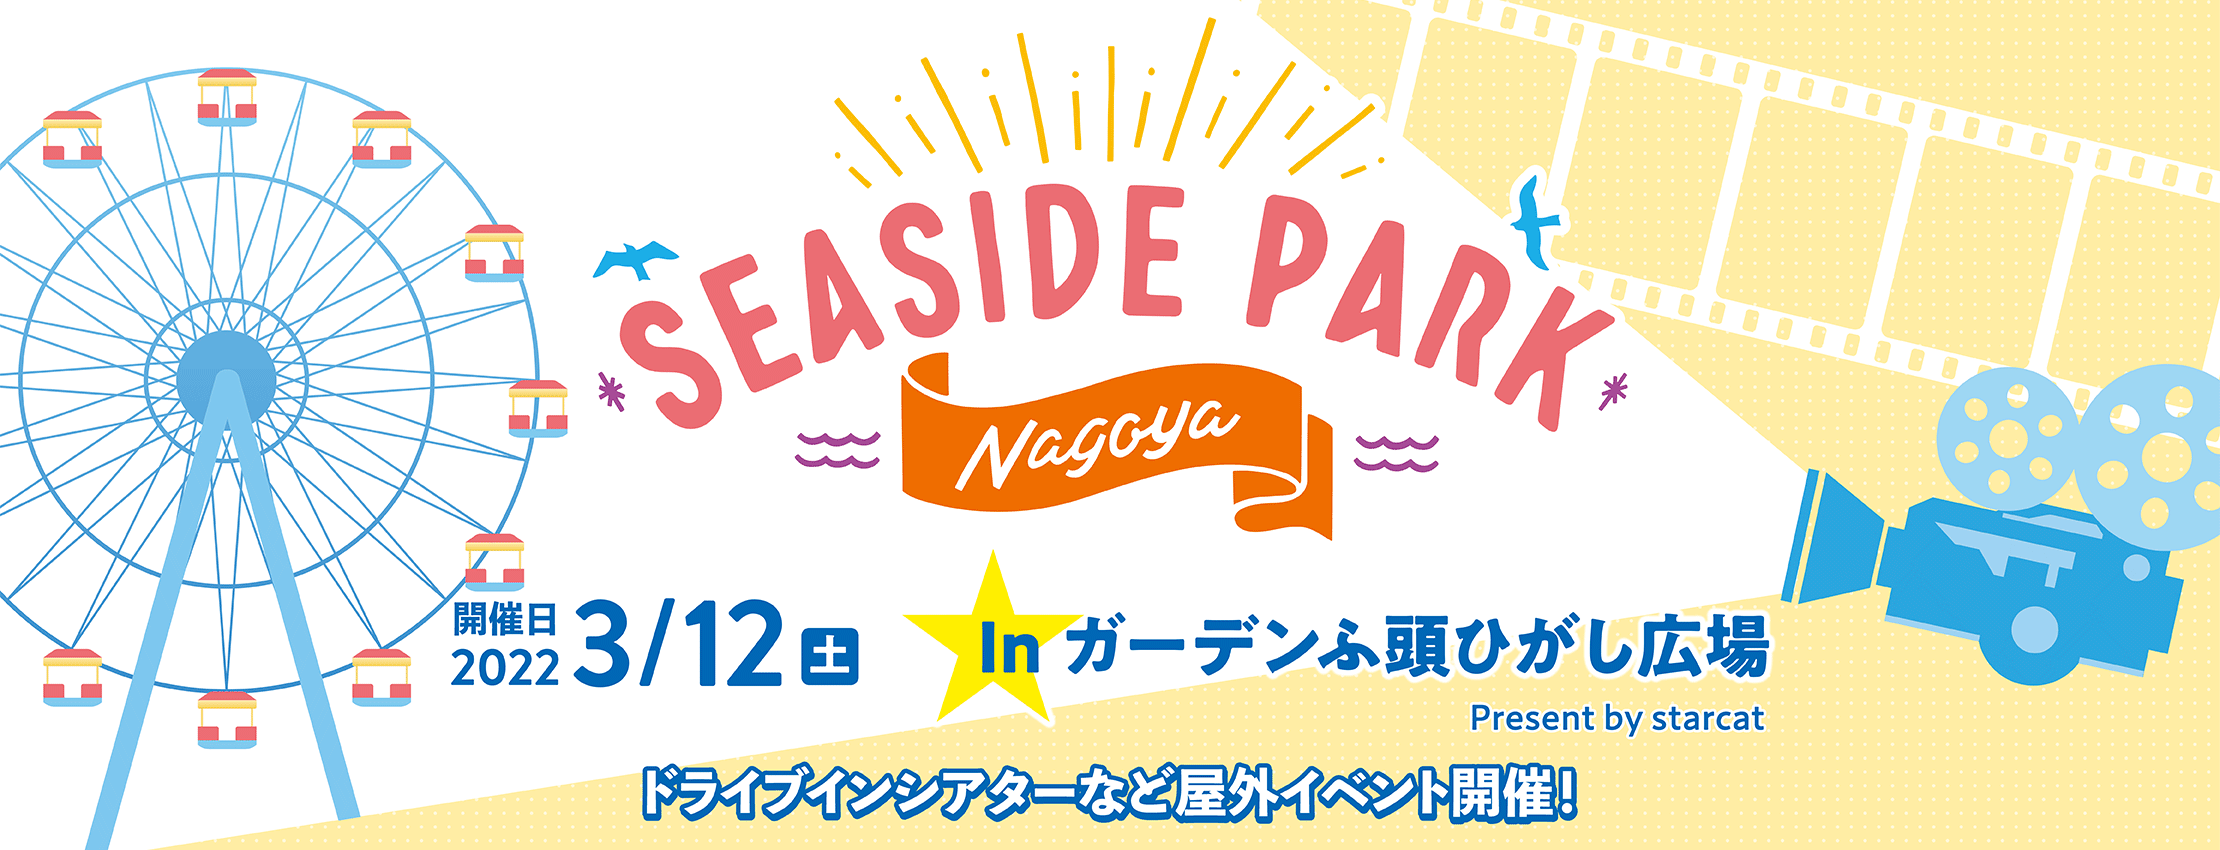 Seaside Park Nagoya in ガーデンふ頭 presented by StarCat【開催日: 2022年3月12日(土)／応募受付: 2022年1月14日(金)～2022年2月23日(水)】